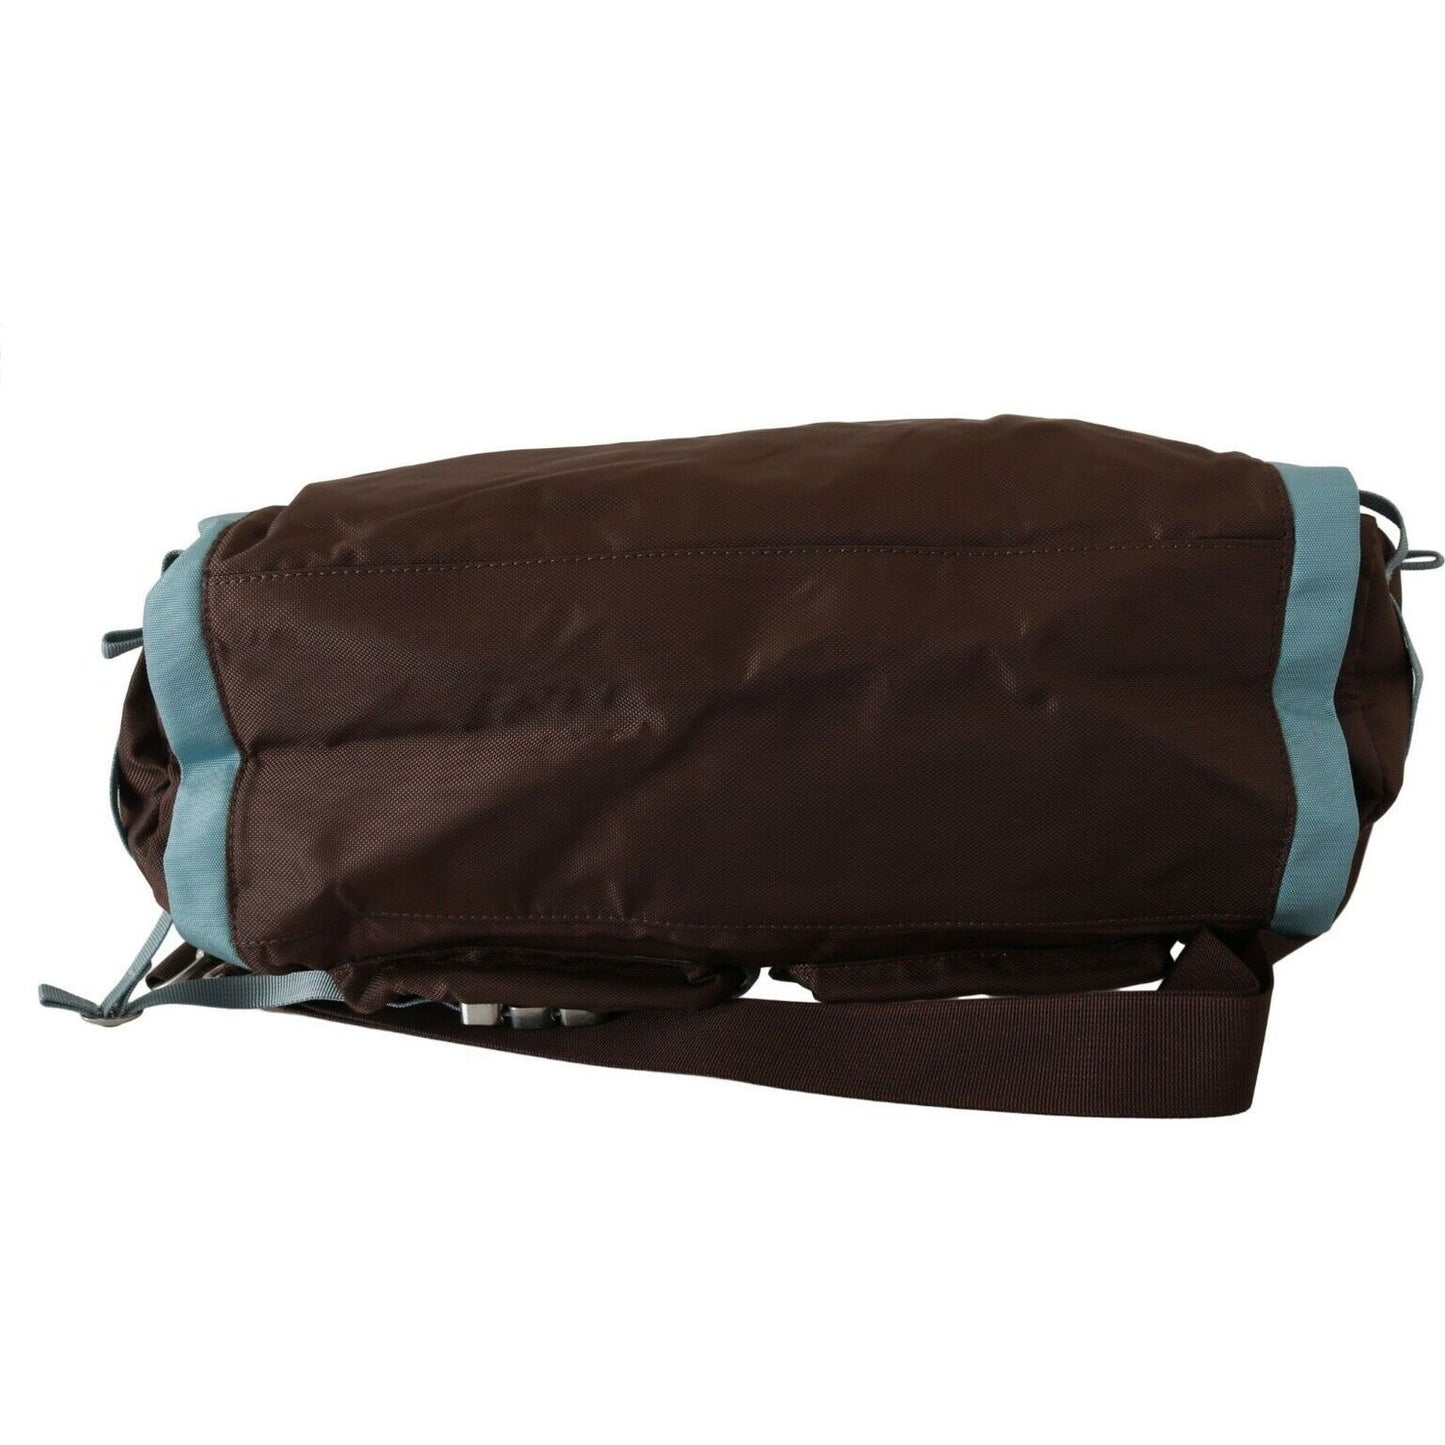 WAYFARER Elegant Duffel Travel Bag in Earthy Brown brown-handbag-duffel-travel-purse Luggage s-l1600-18-1-f6ef4317-21d.jpg